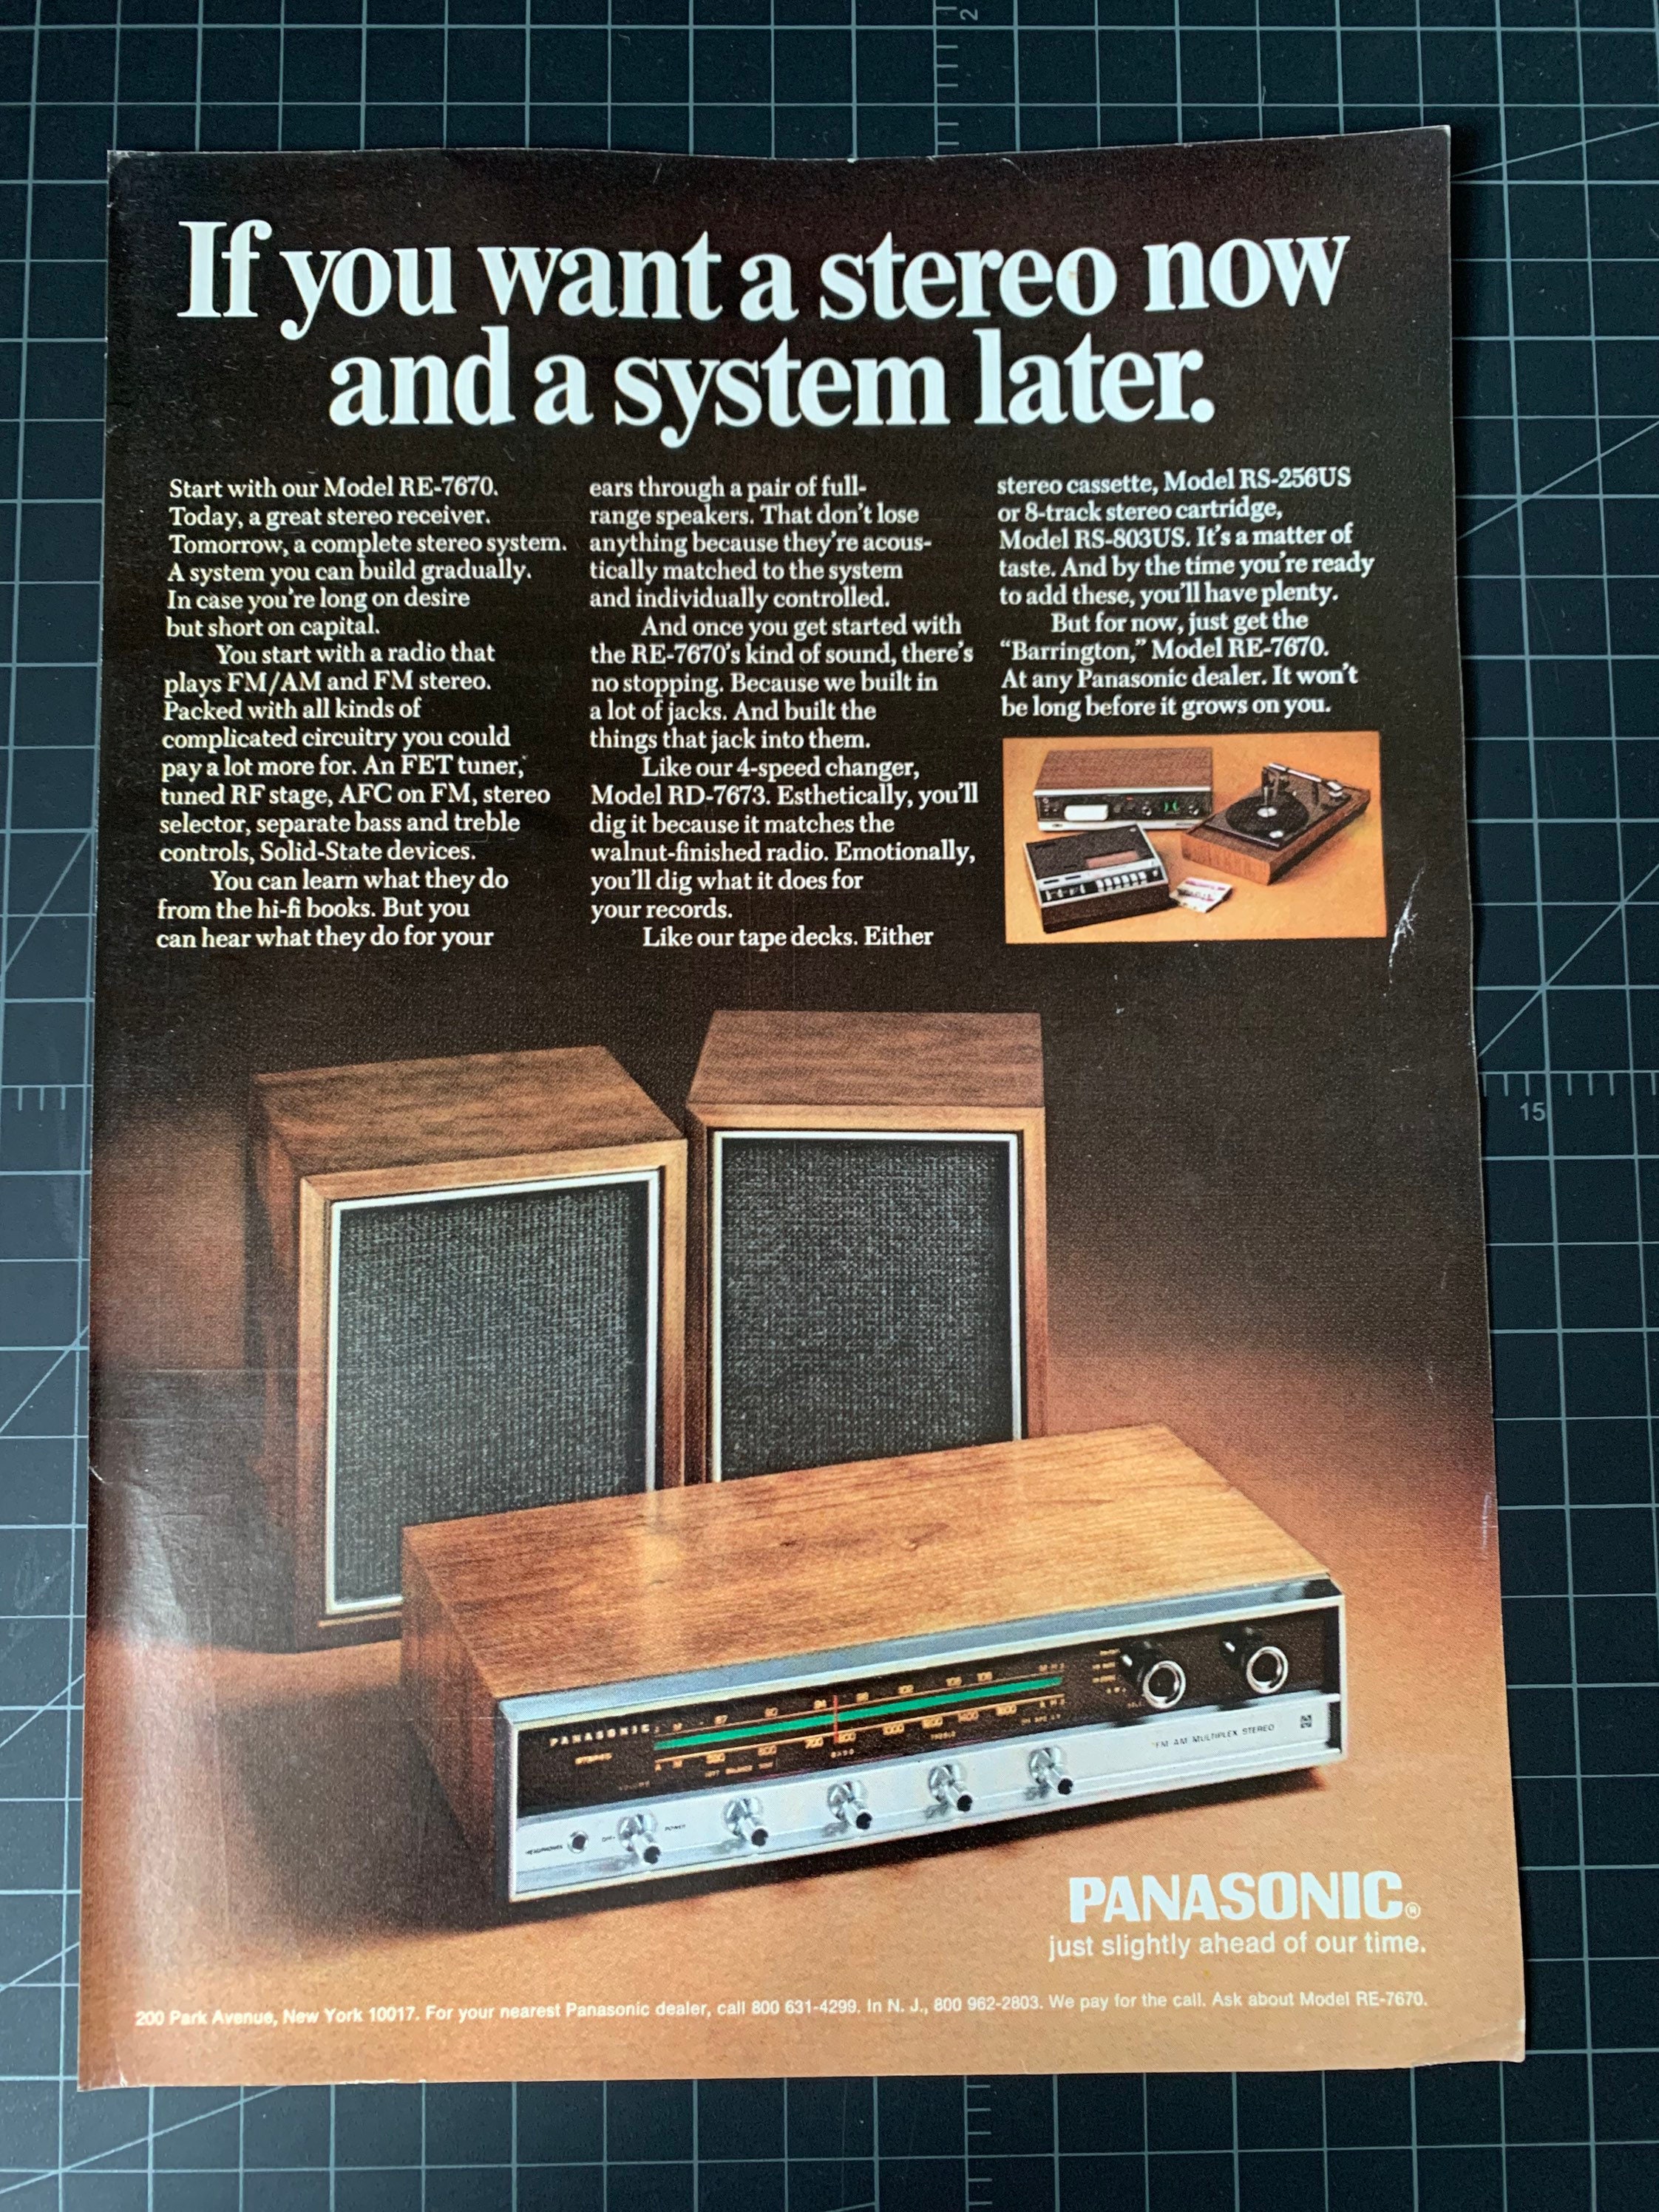 1979 Panasonic Cockpit Car Stereo System vintage print Ad 